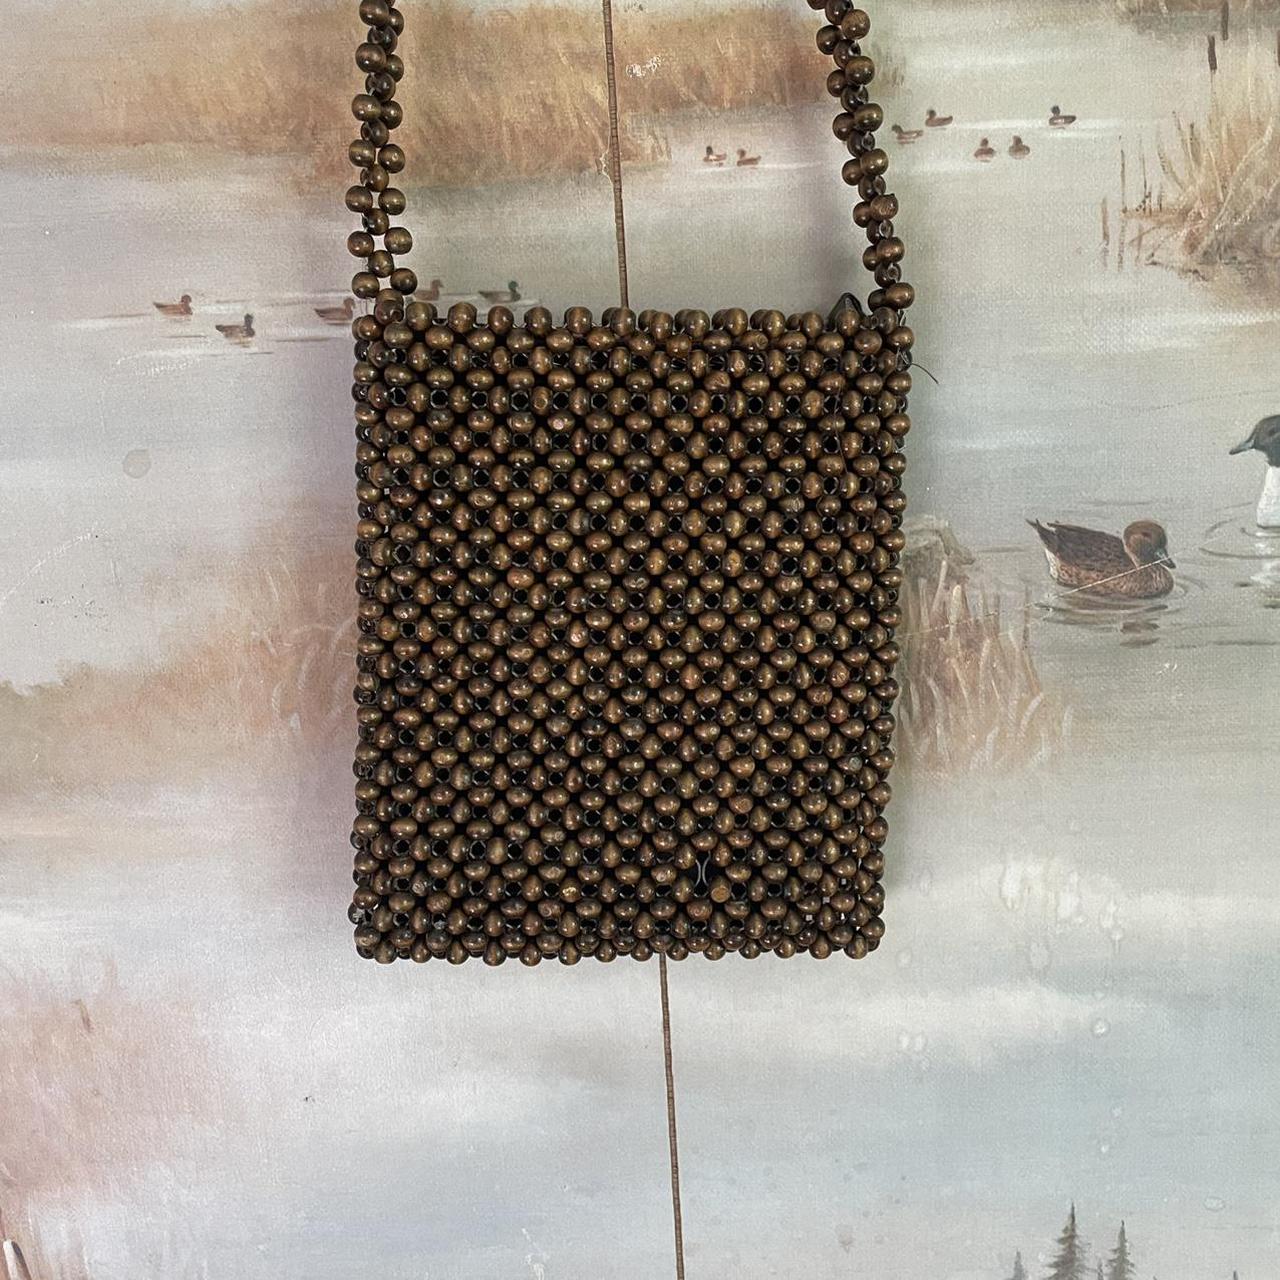 Product Image 2 - Vintage brown wooden beaded bag